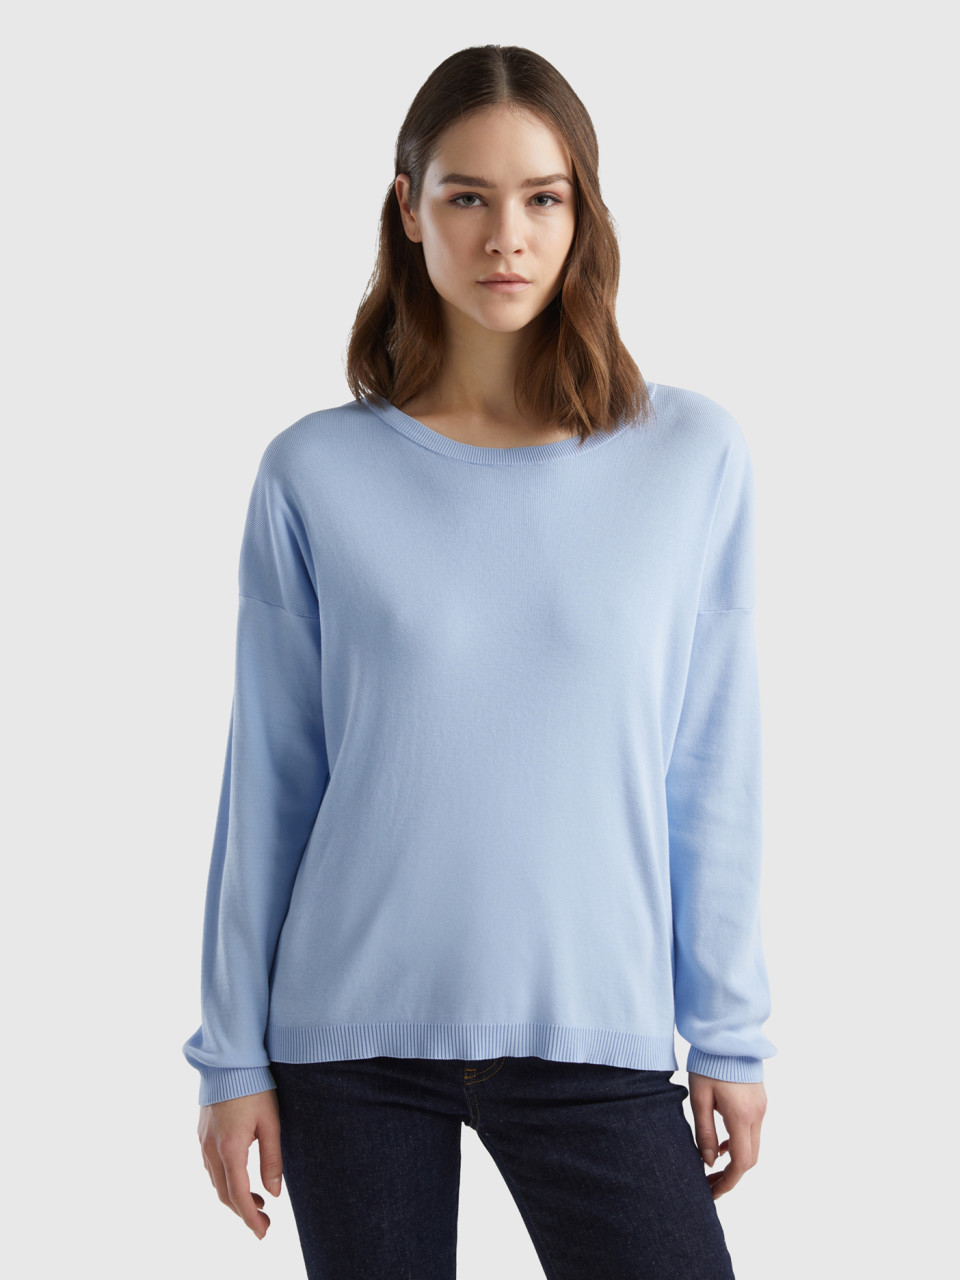 Benetton, Cotton Sweater With Round Neck, Sky Blue, Women